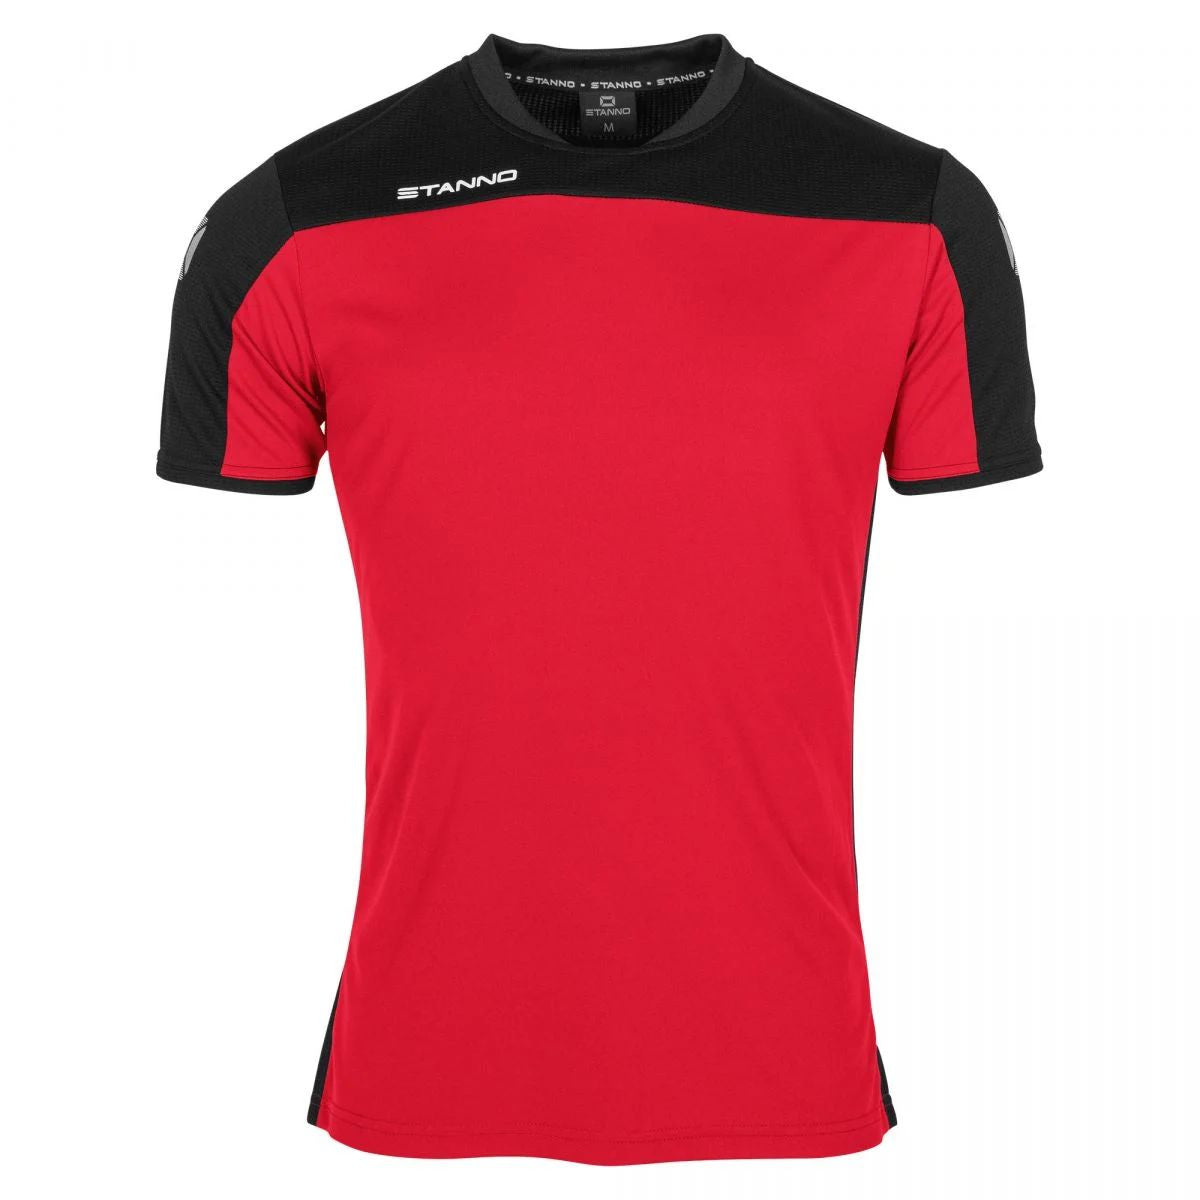 Stanno - Pride Shirt - Red & Black